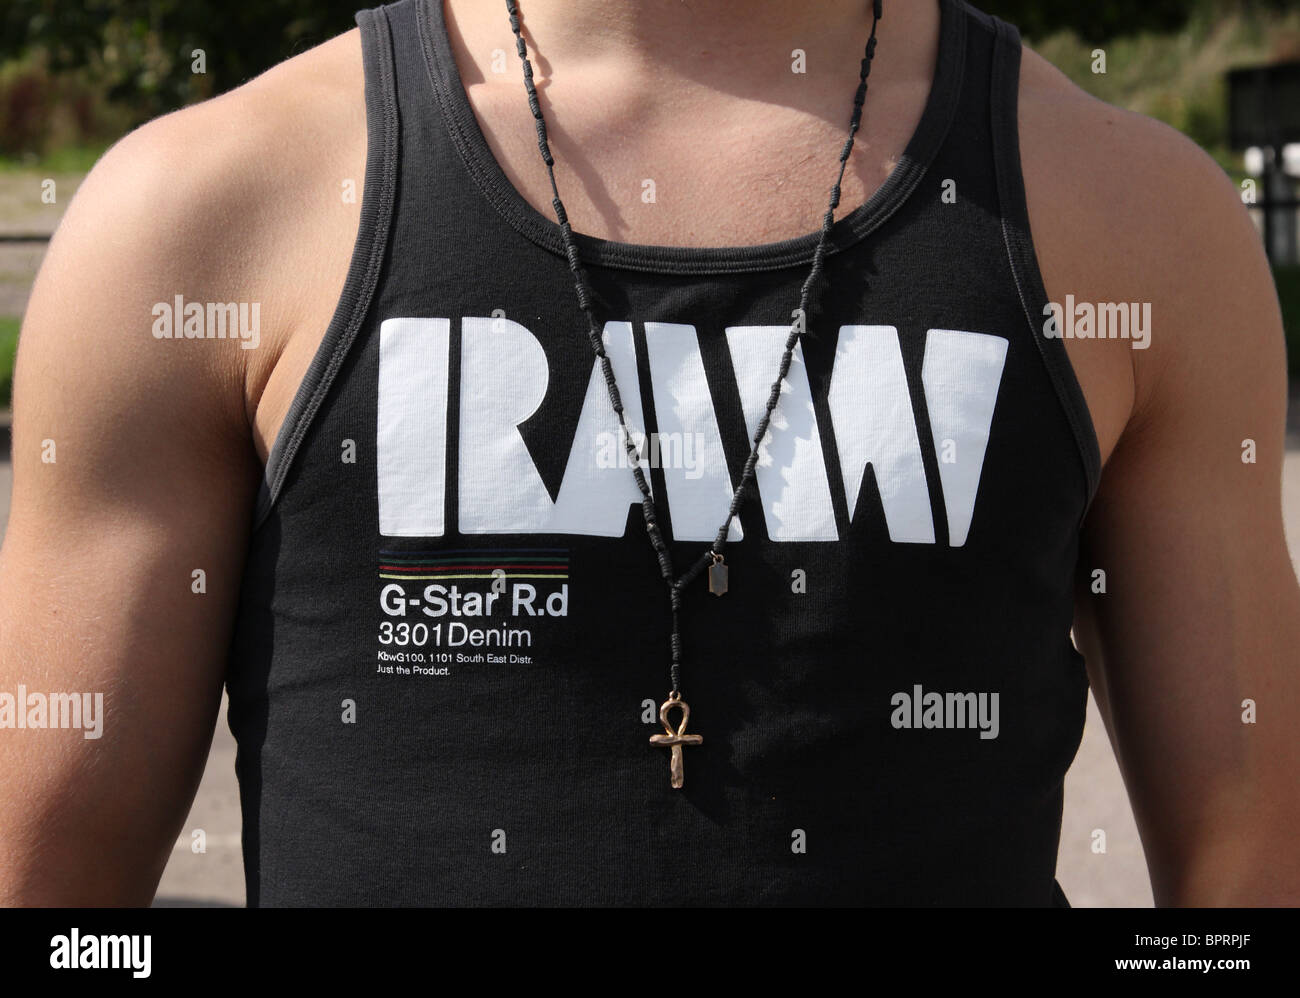 A G-Star RAW vest. Stock Photo